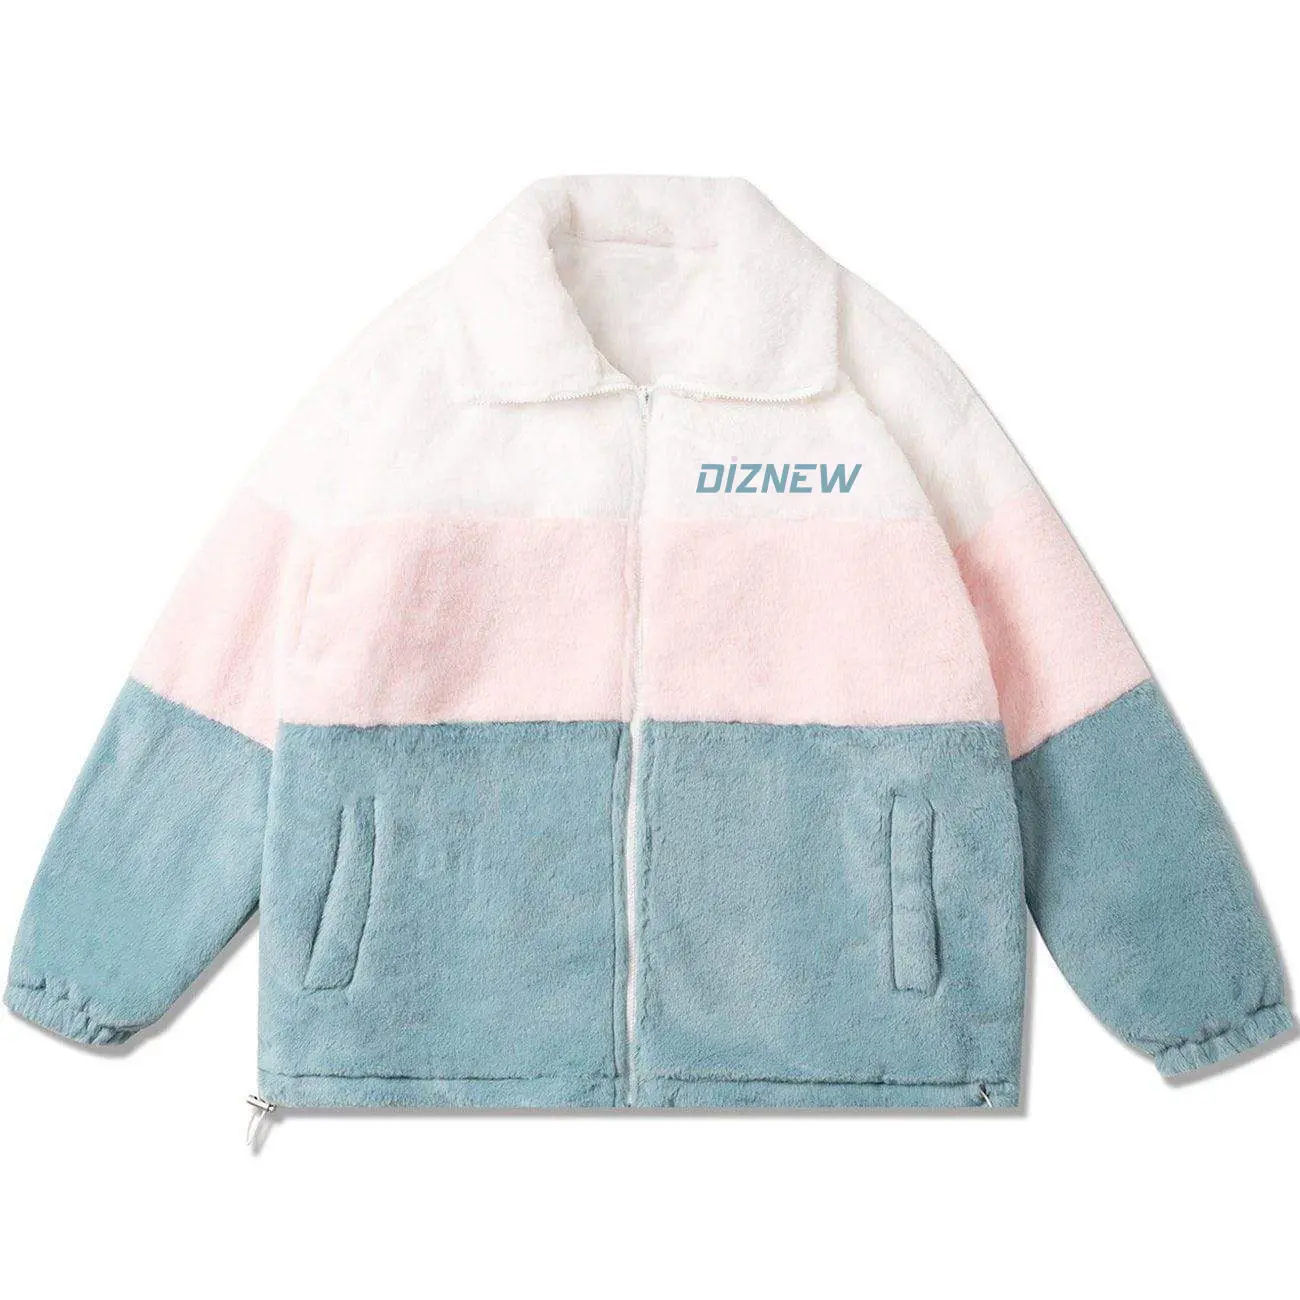 DiZNEW 도매 빈 varsity 재킷 삼색 플러시 패치 워크 겨울 코트 패션 사용자 정의 로고 부드럽고 편안한 재킷